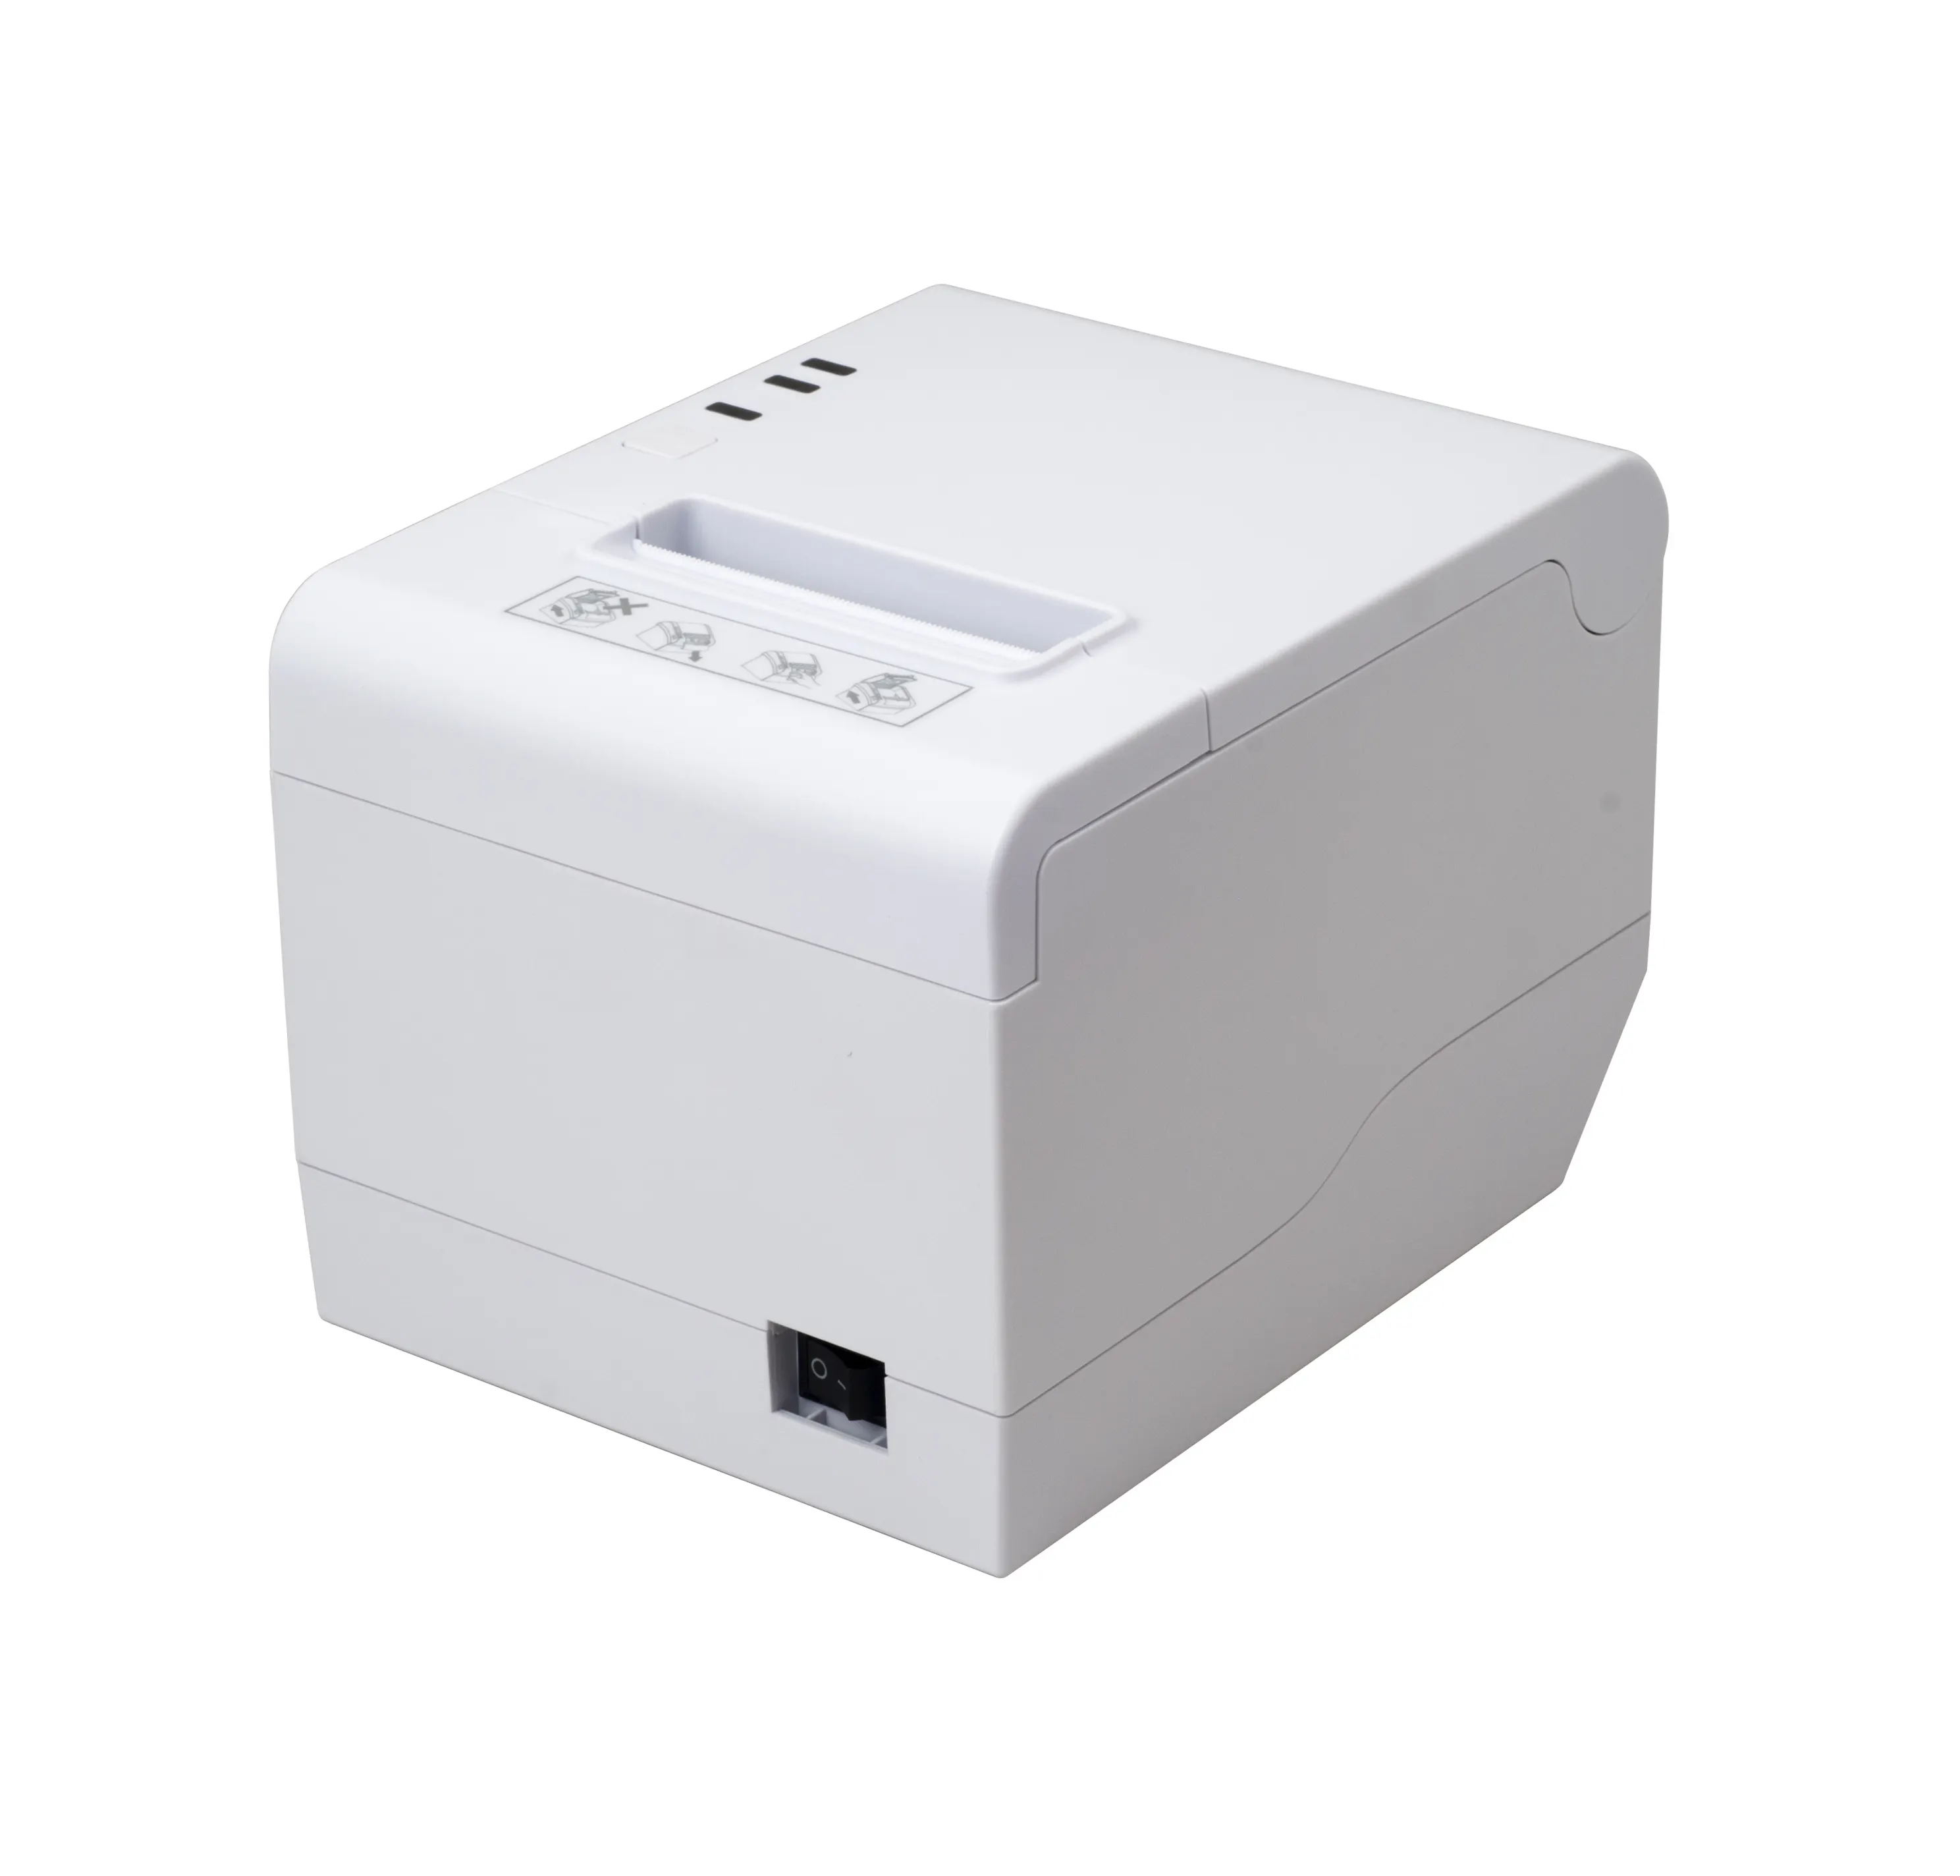 Mini impresora térmica portátil pos, máquina de impresión automática de 80mm, multilenguaje, imprime recibos, Bluetooth y wifi opcional